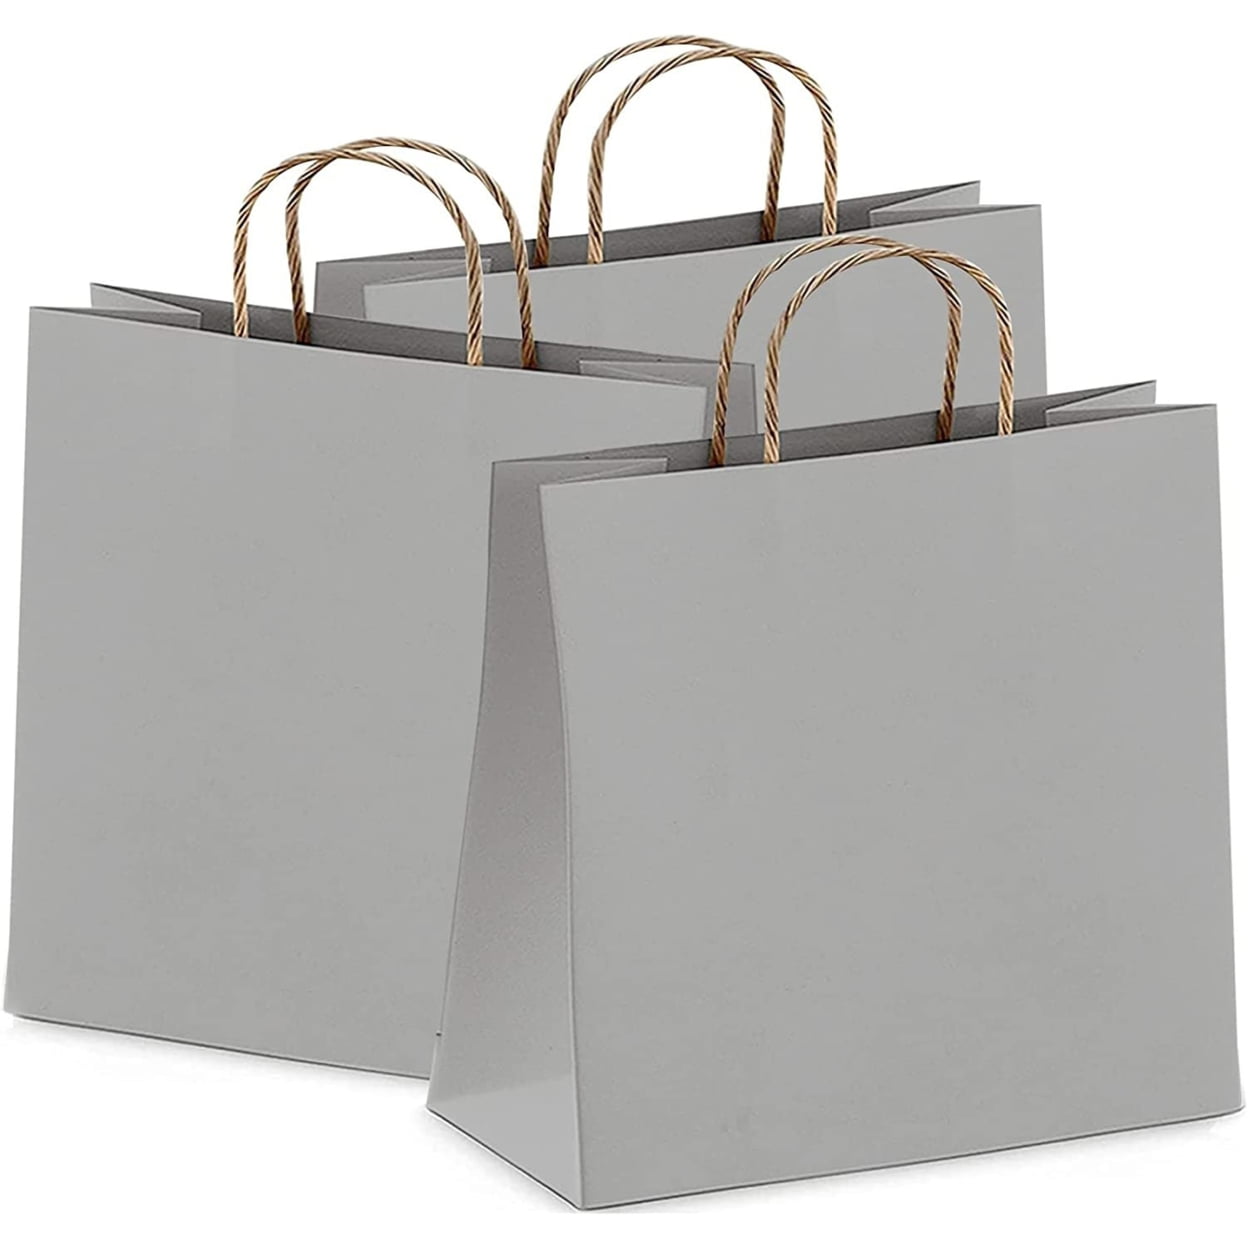 KPPS- Small Plain Kraft Paper Bag with Handles - 8x4.5x10.25